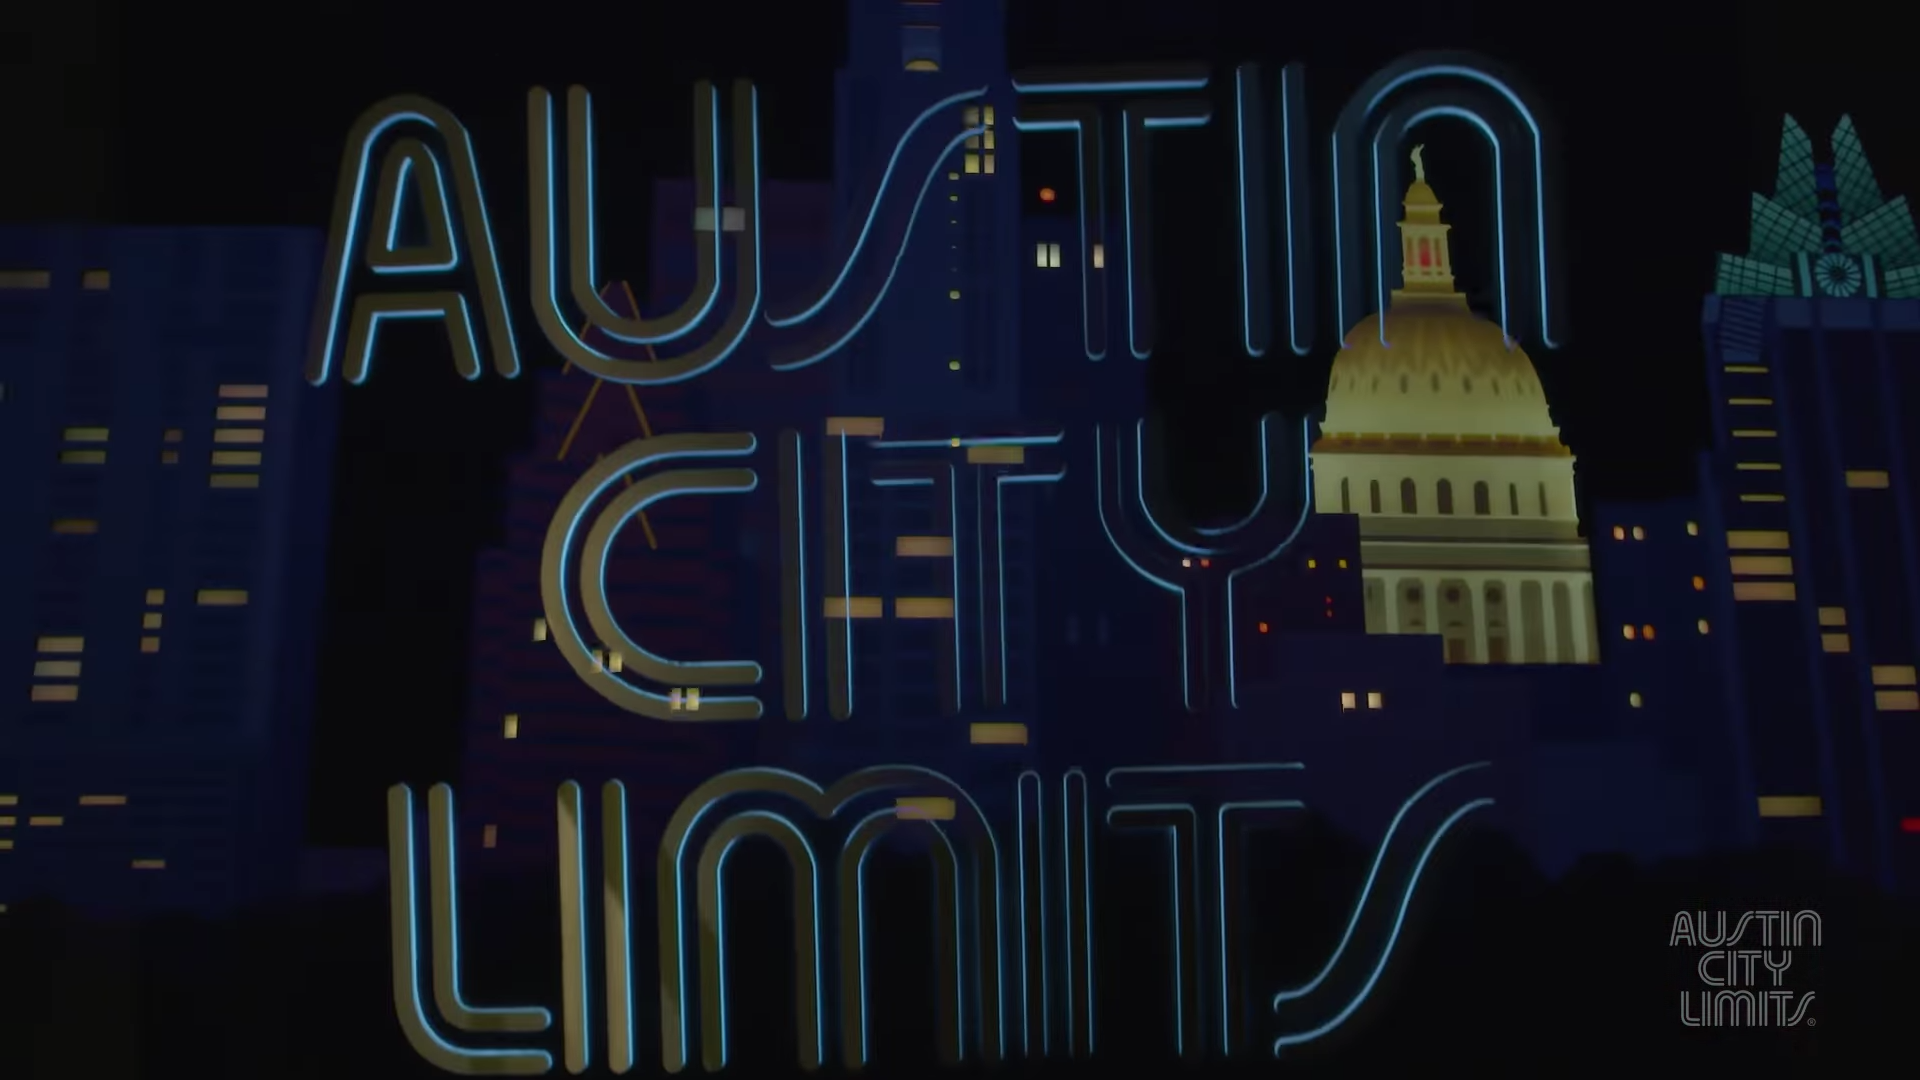 Austin City Limits. Photo by: Austin City Limits / YouTube